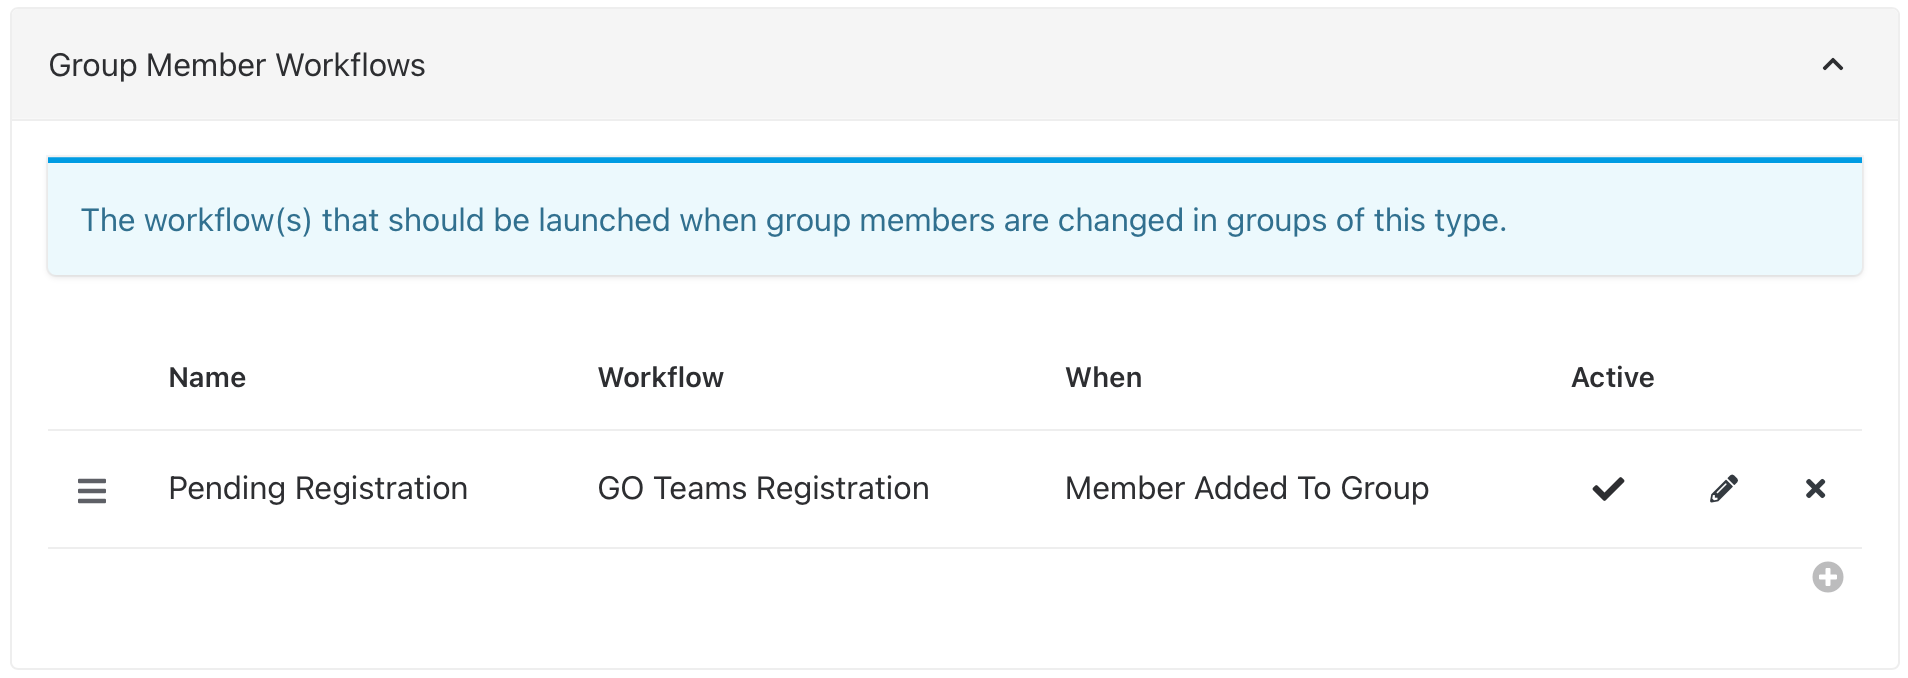 Group_Member_Workflows.png